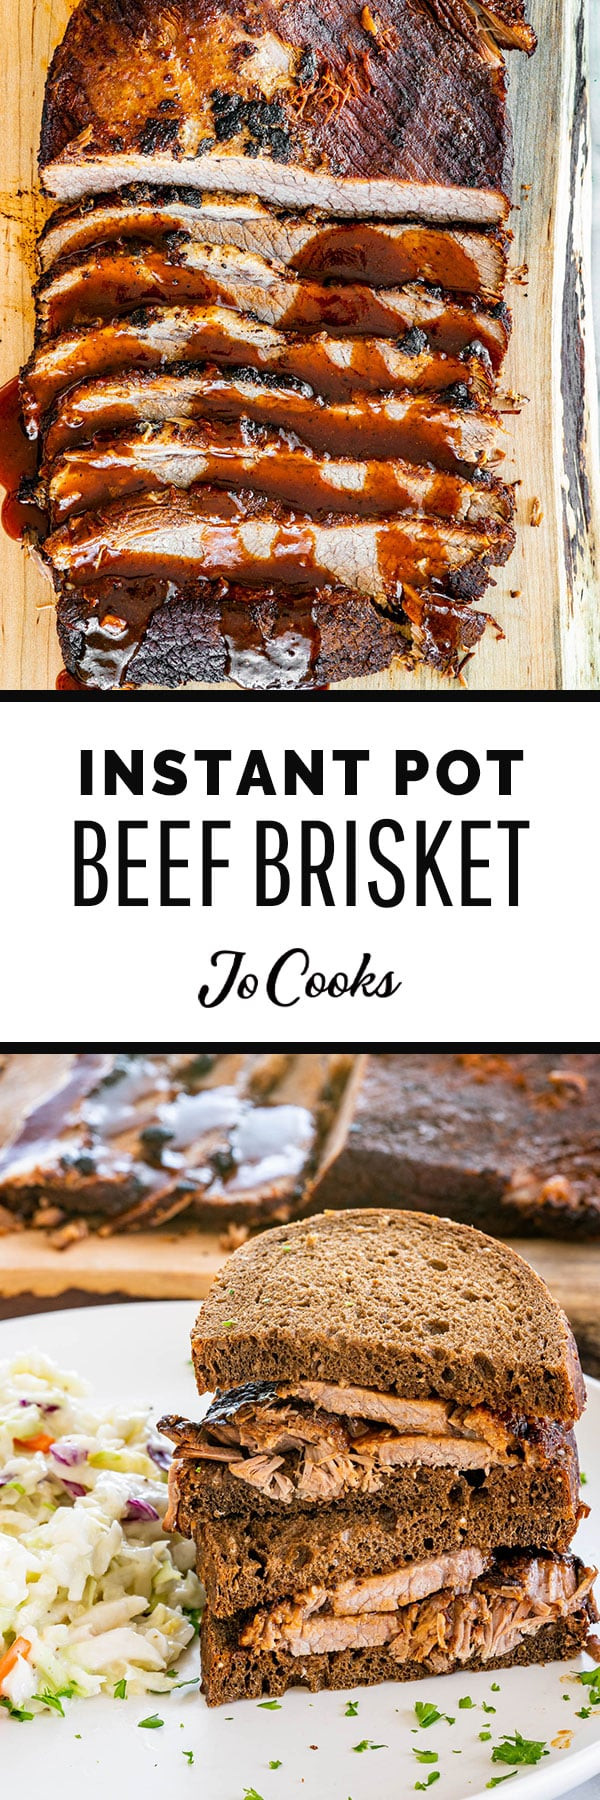 Instant Pot Beef Brisket
 Instant Pot Beef Brisket Jo Cooks